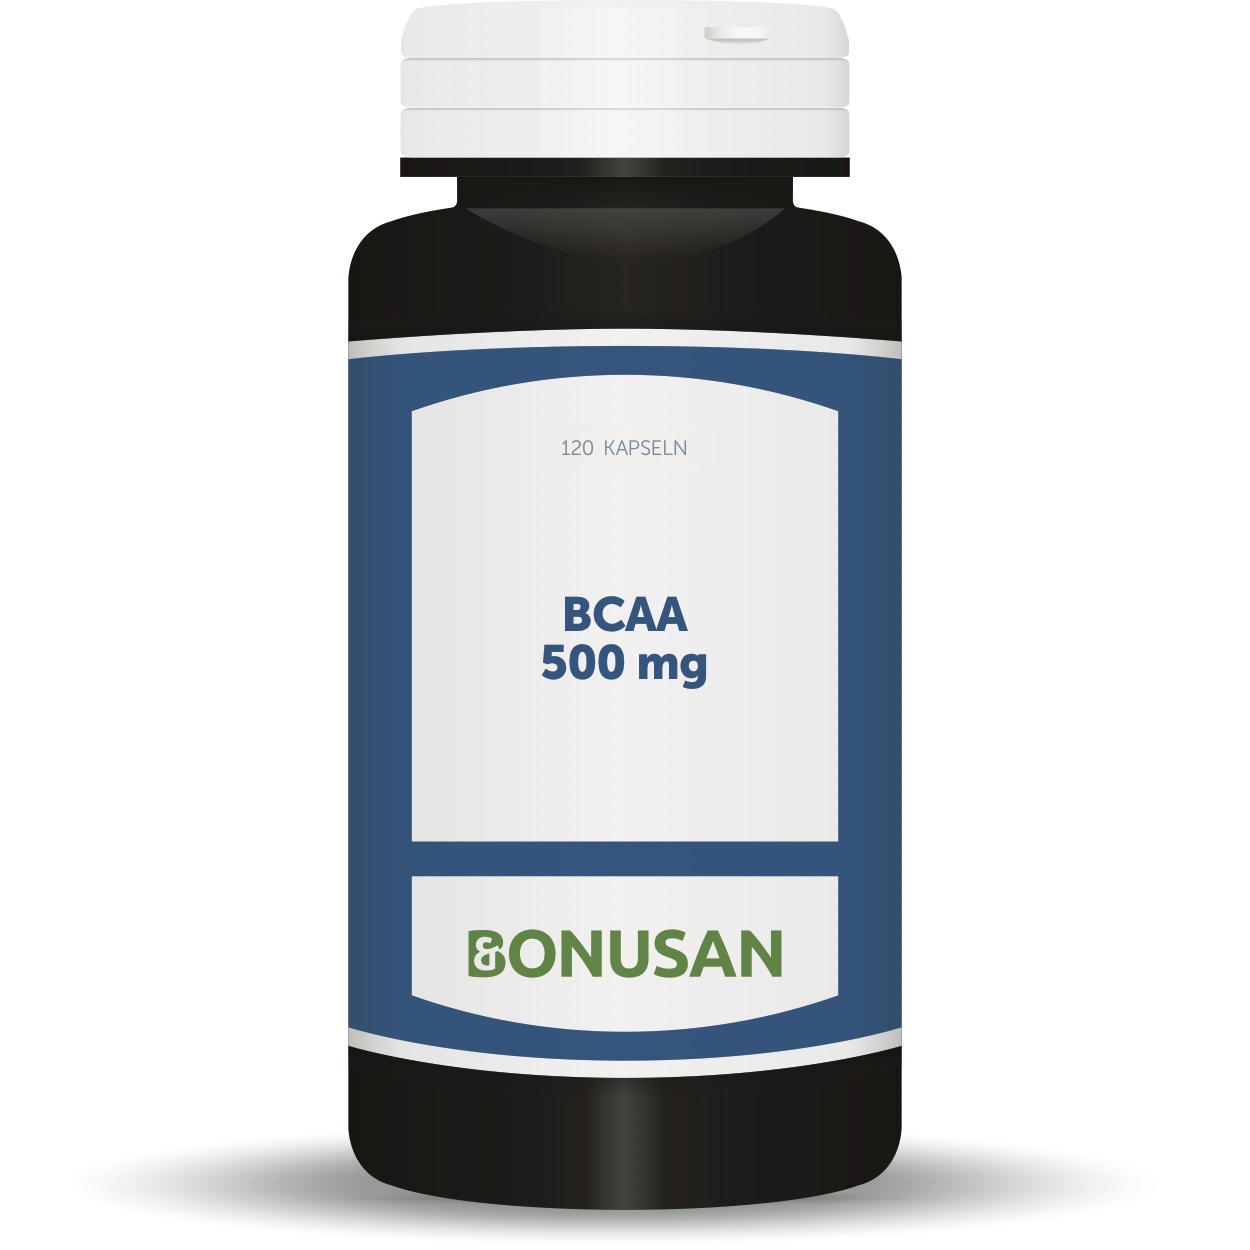 BCAA 500 mg Kapseln